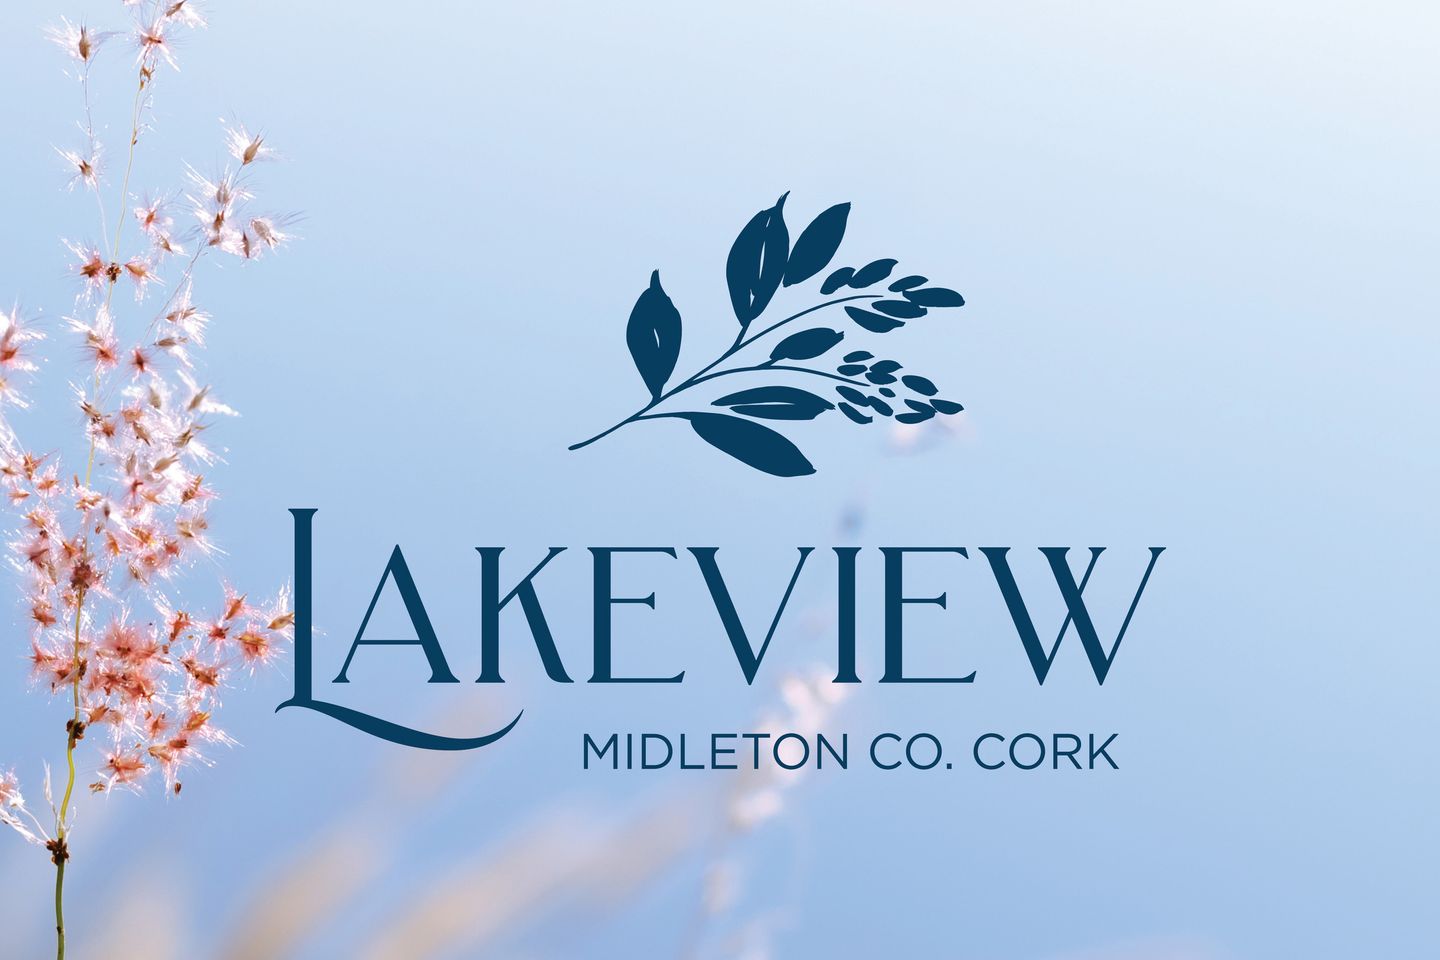 Lakeview, Lakeview, Castleredmond, Midleton, Co. C, Midleton, Co. Cork